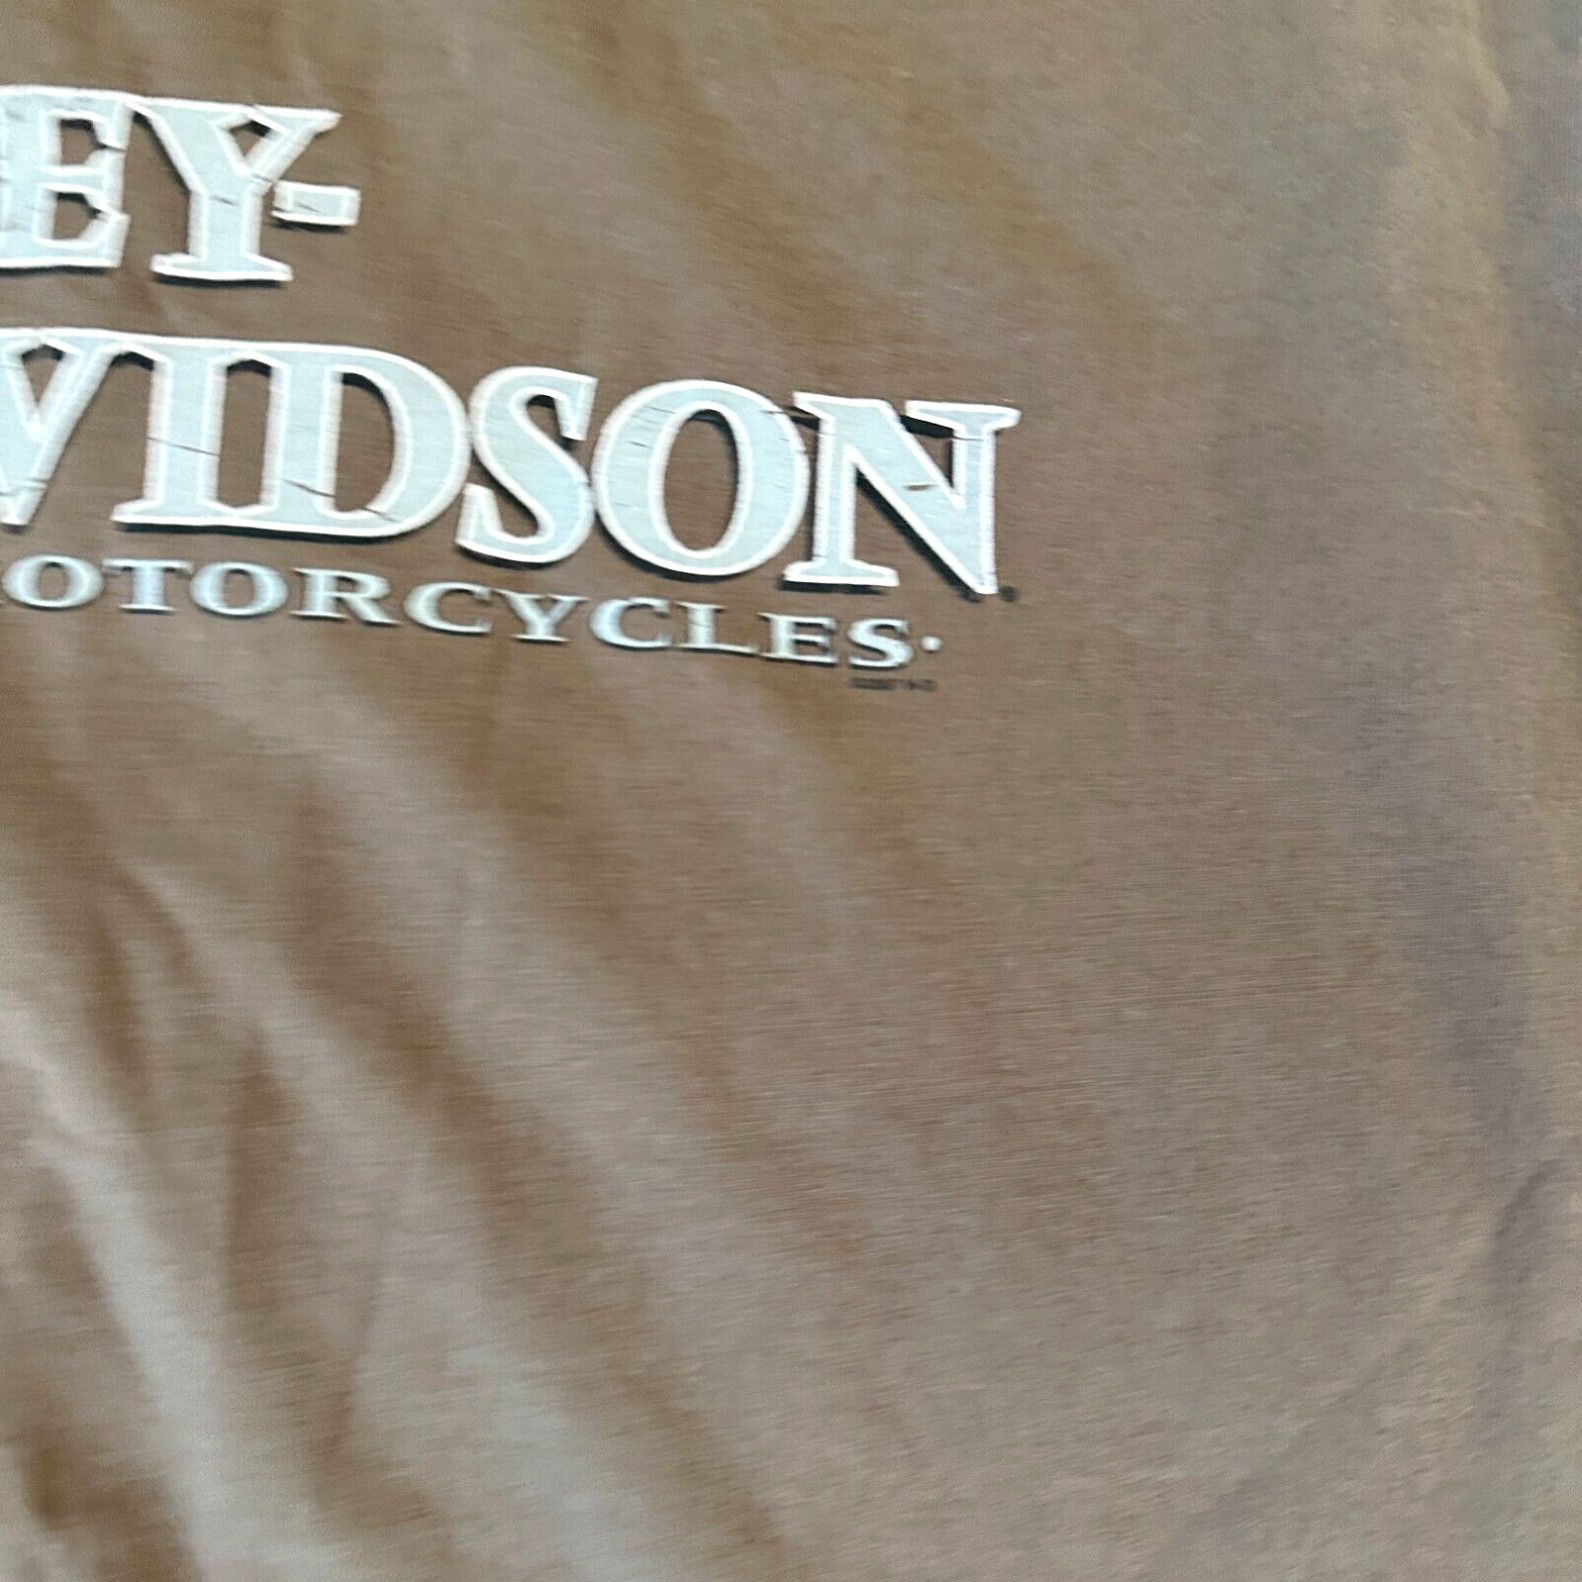 Harley Davidson Harley Davidson Shirt Adult 2XL XXL Brown Mens Casual Biker Made in USA Size US XXL / EU 58 / 5 - 3 Thumbnail